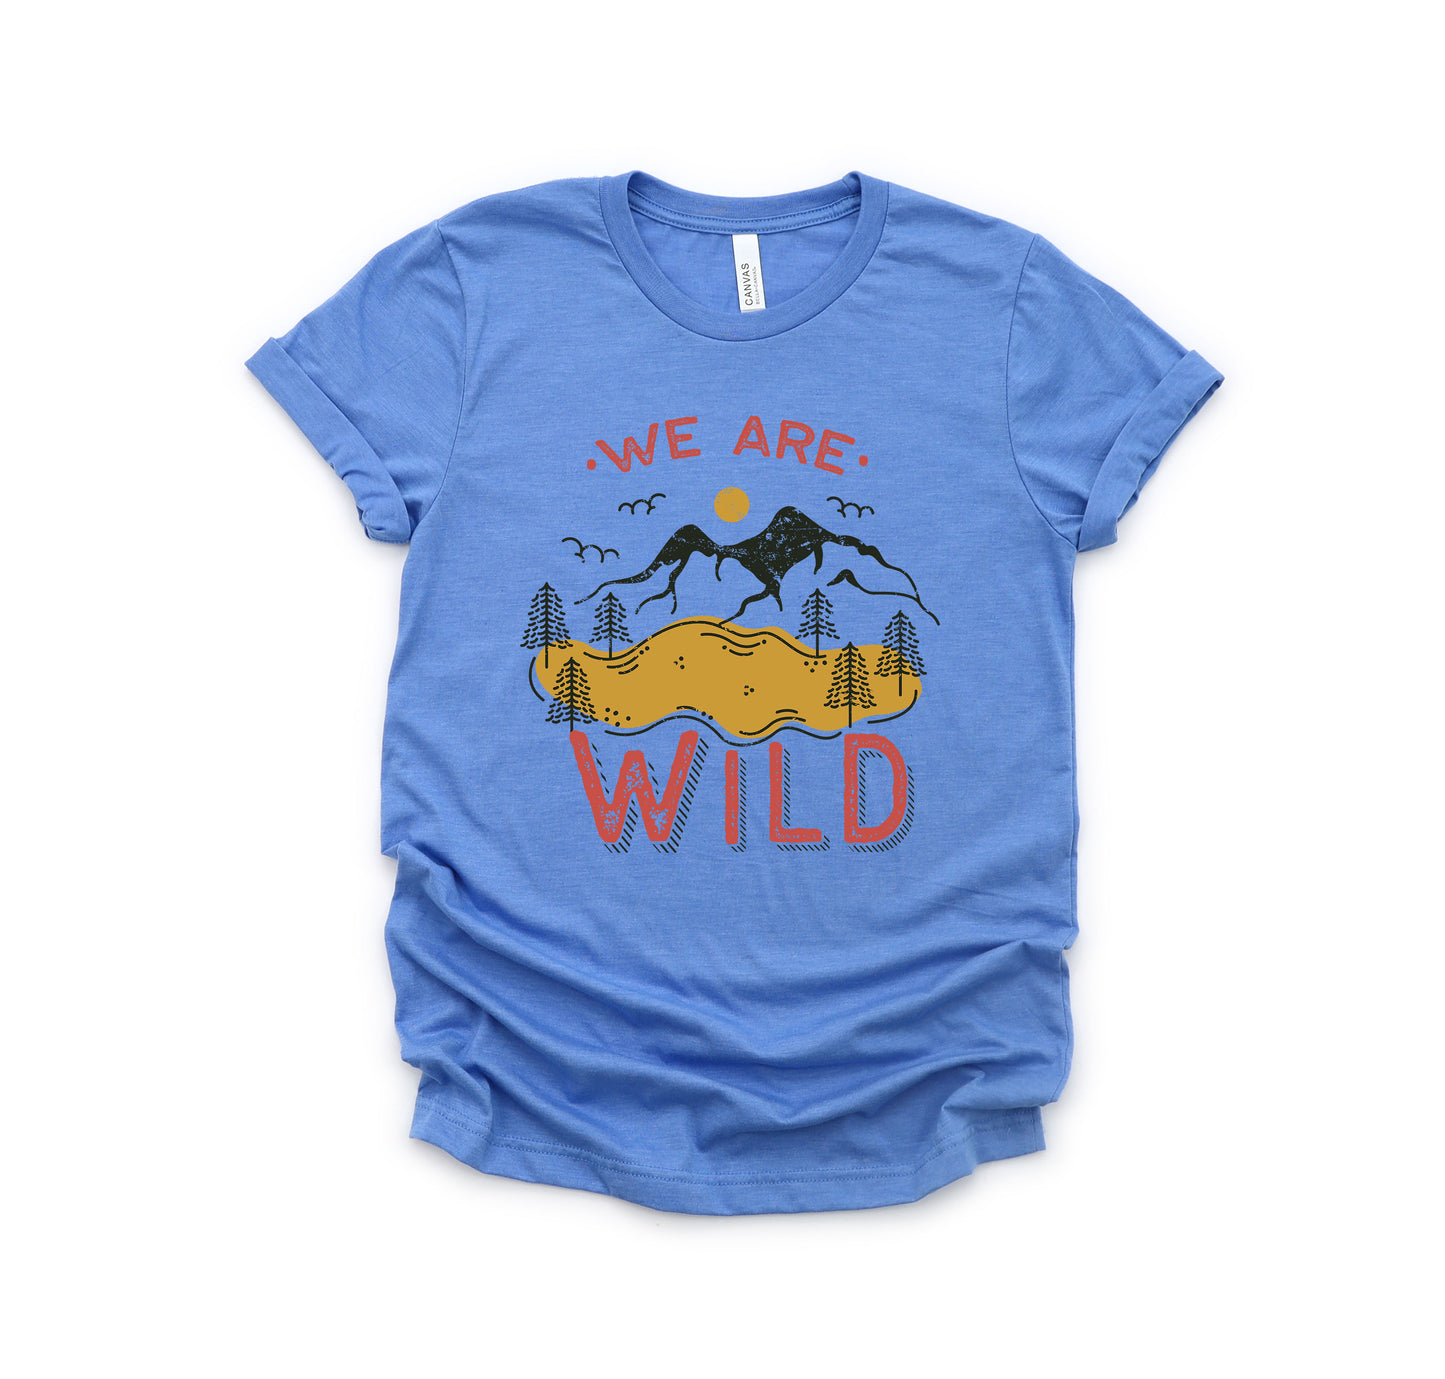 We Are Wild | Toddler Short Sleeve Crew Neck